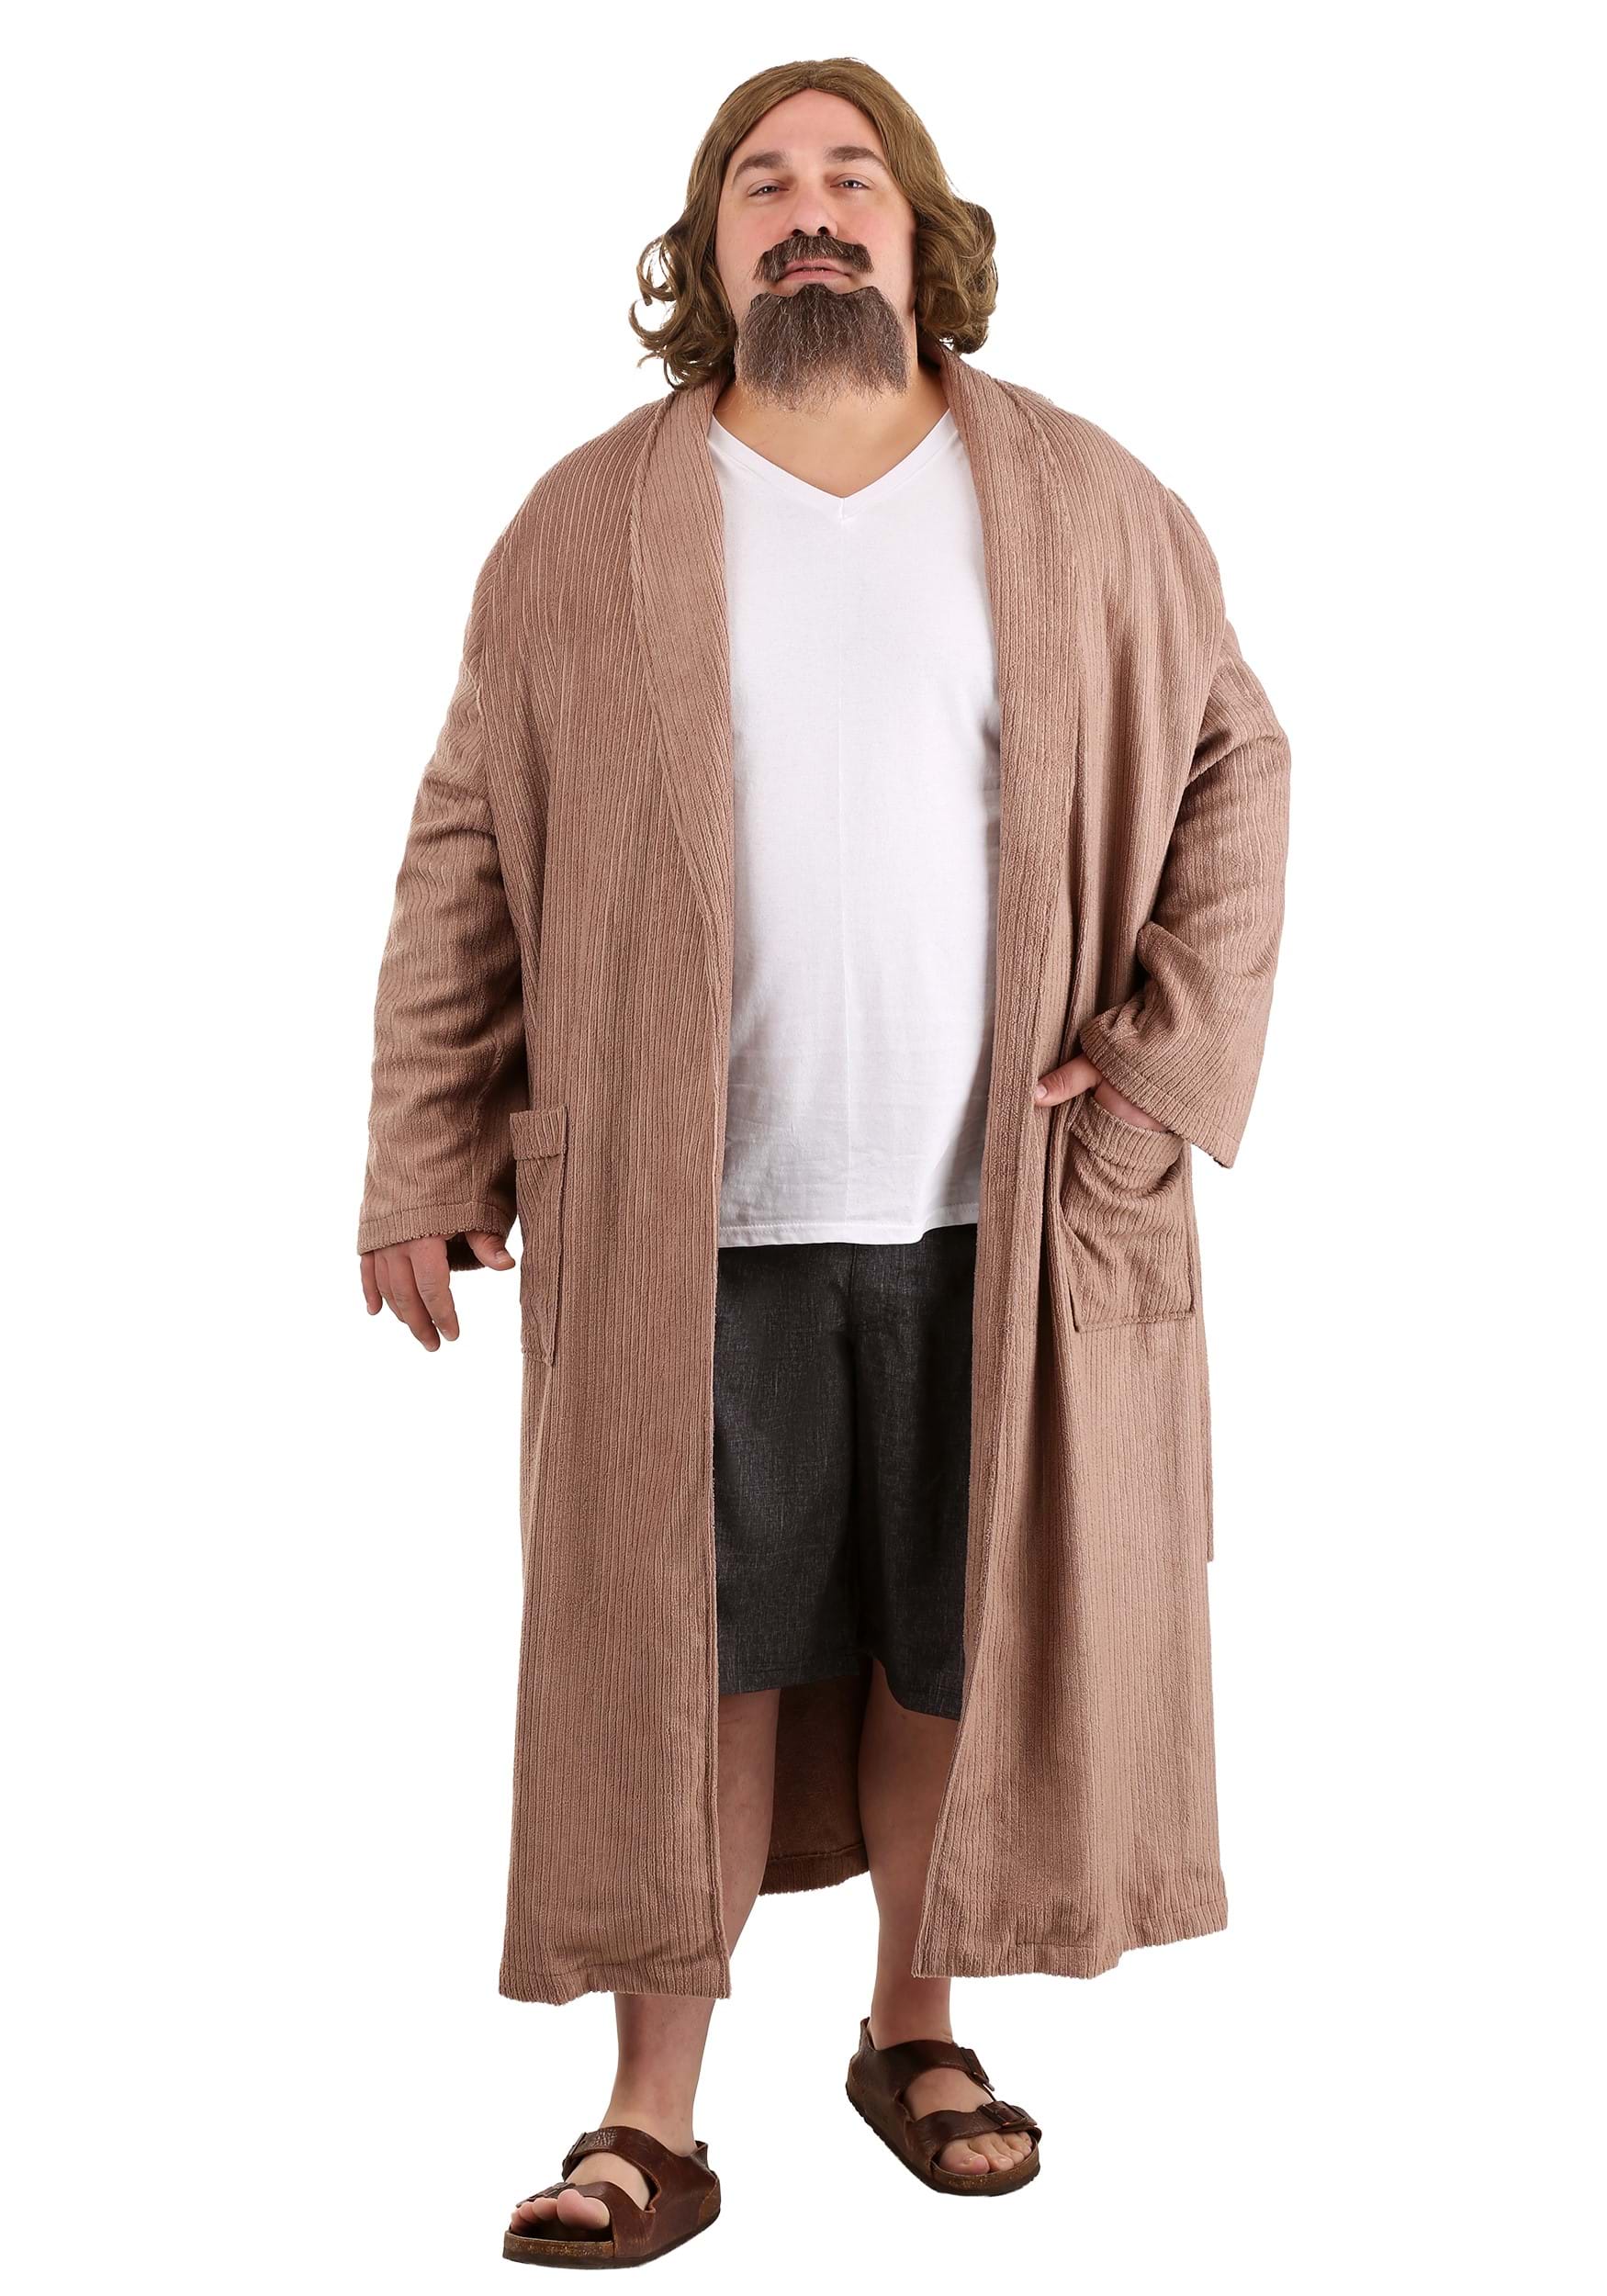 Plus Size The Big Lebowski The Dude Bathrobe Mens Costume